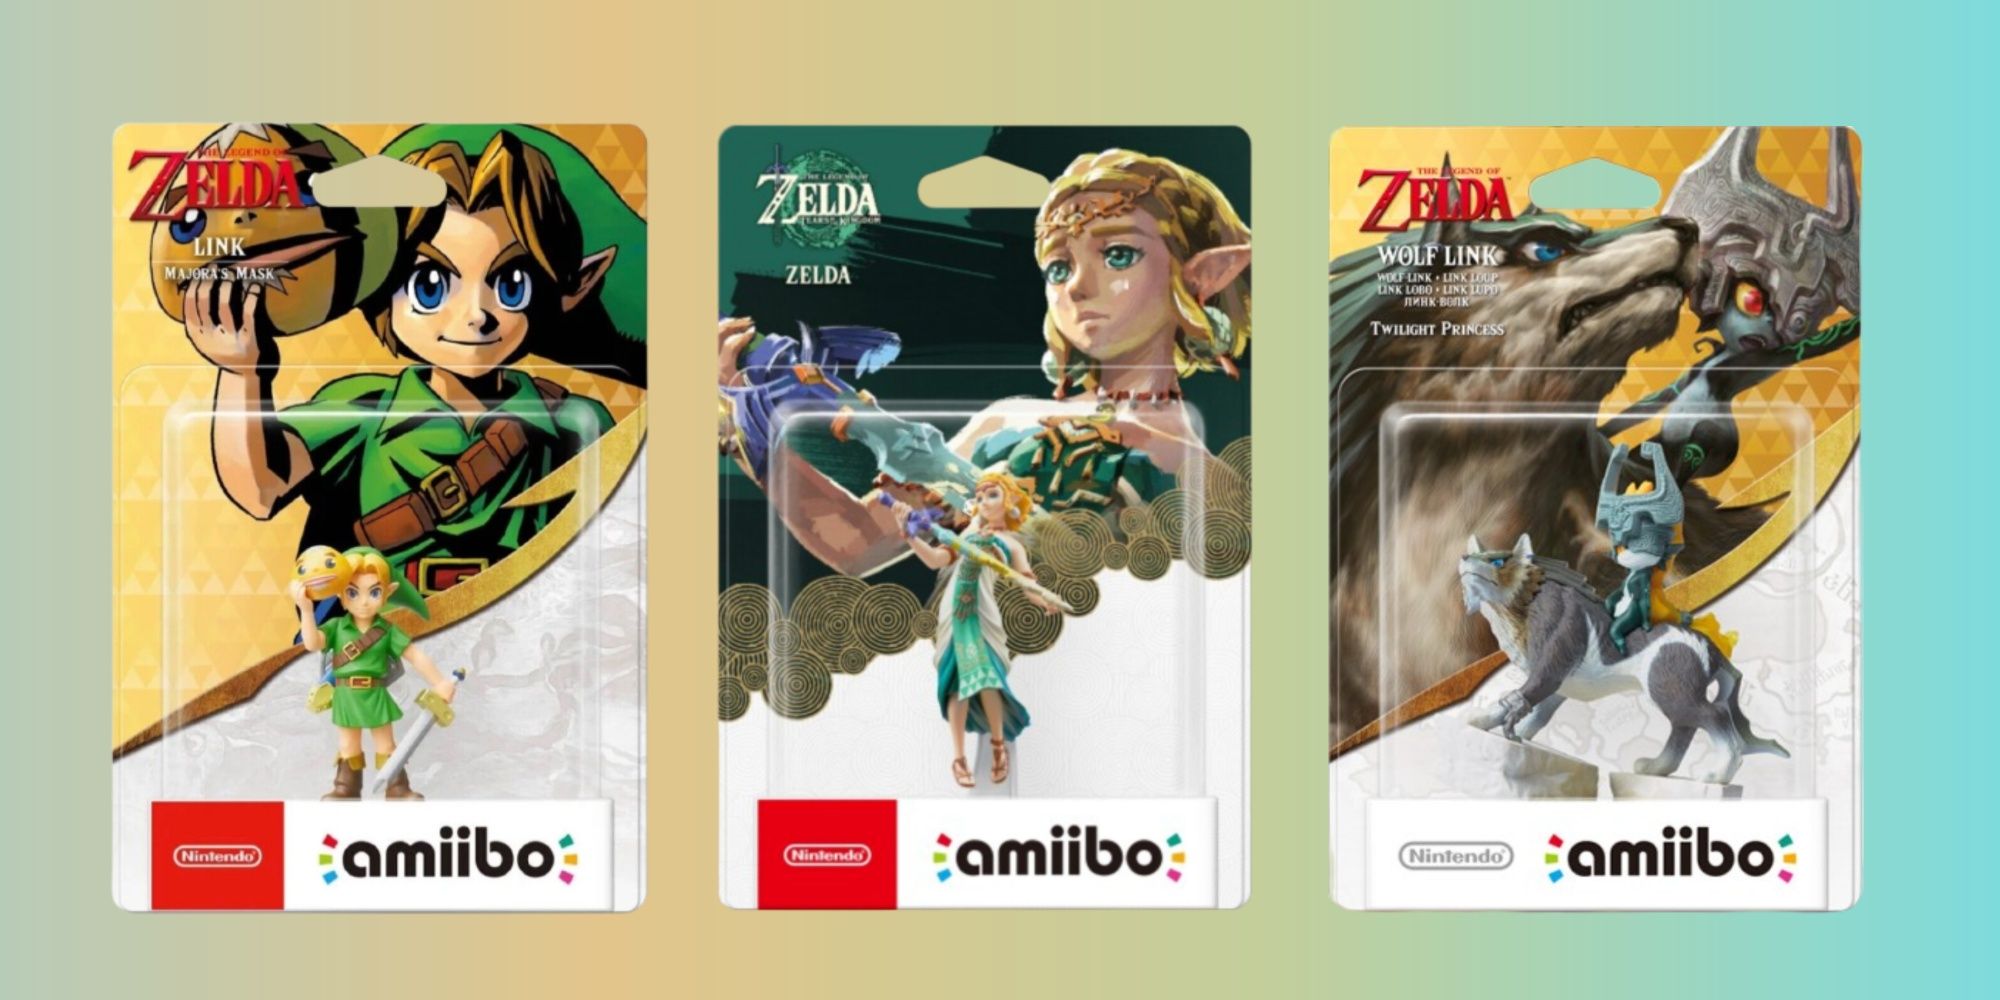 amiibo Link Figure (The Legend of Zelda: Majora's Mask)